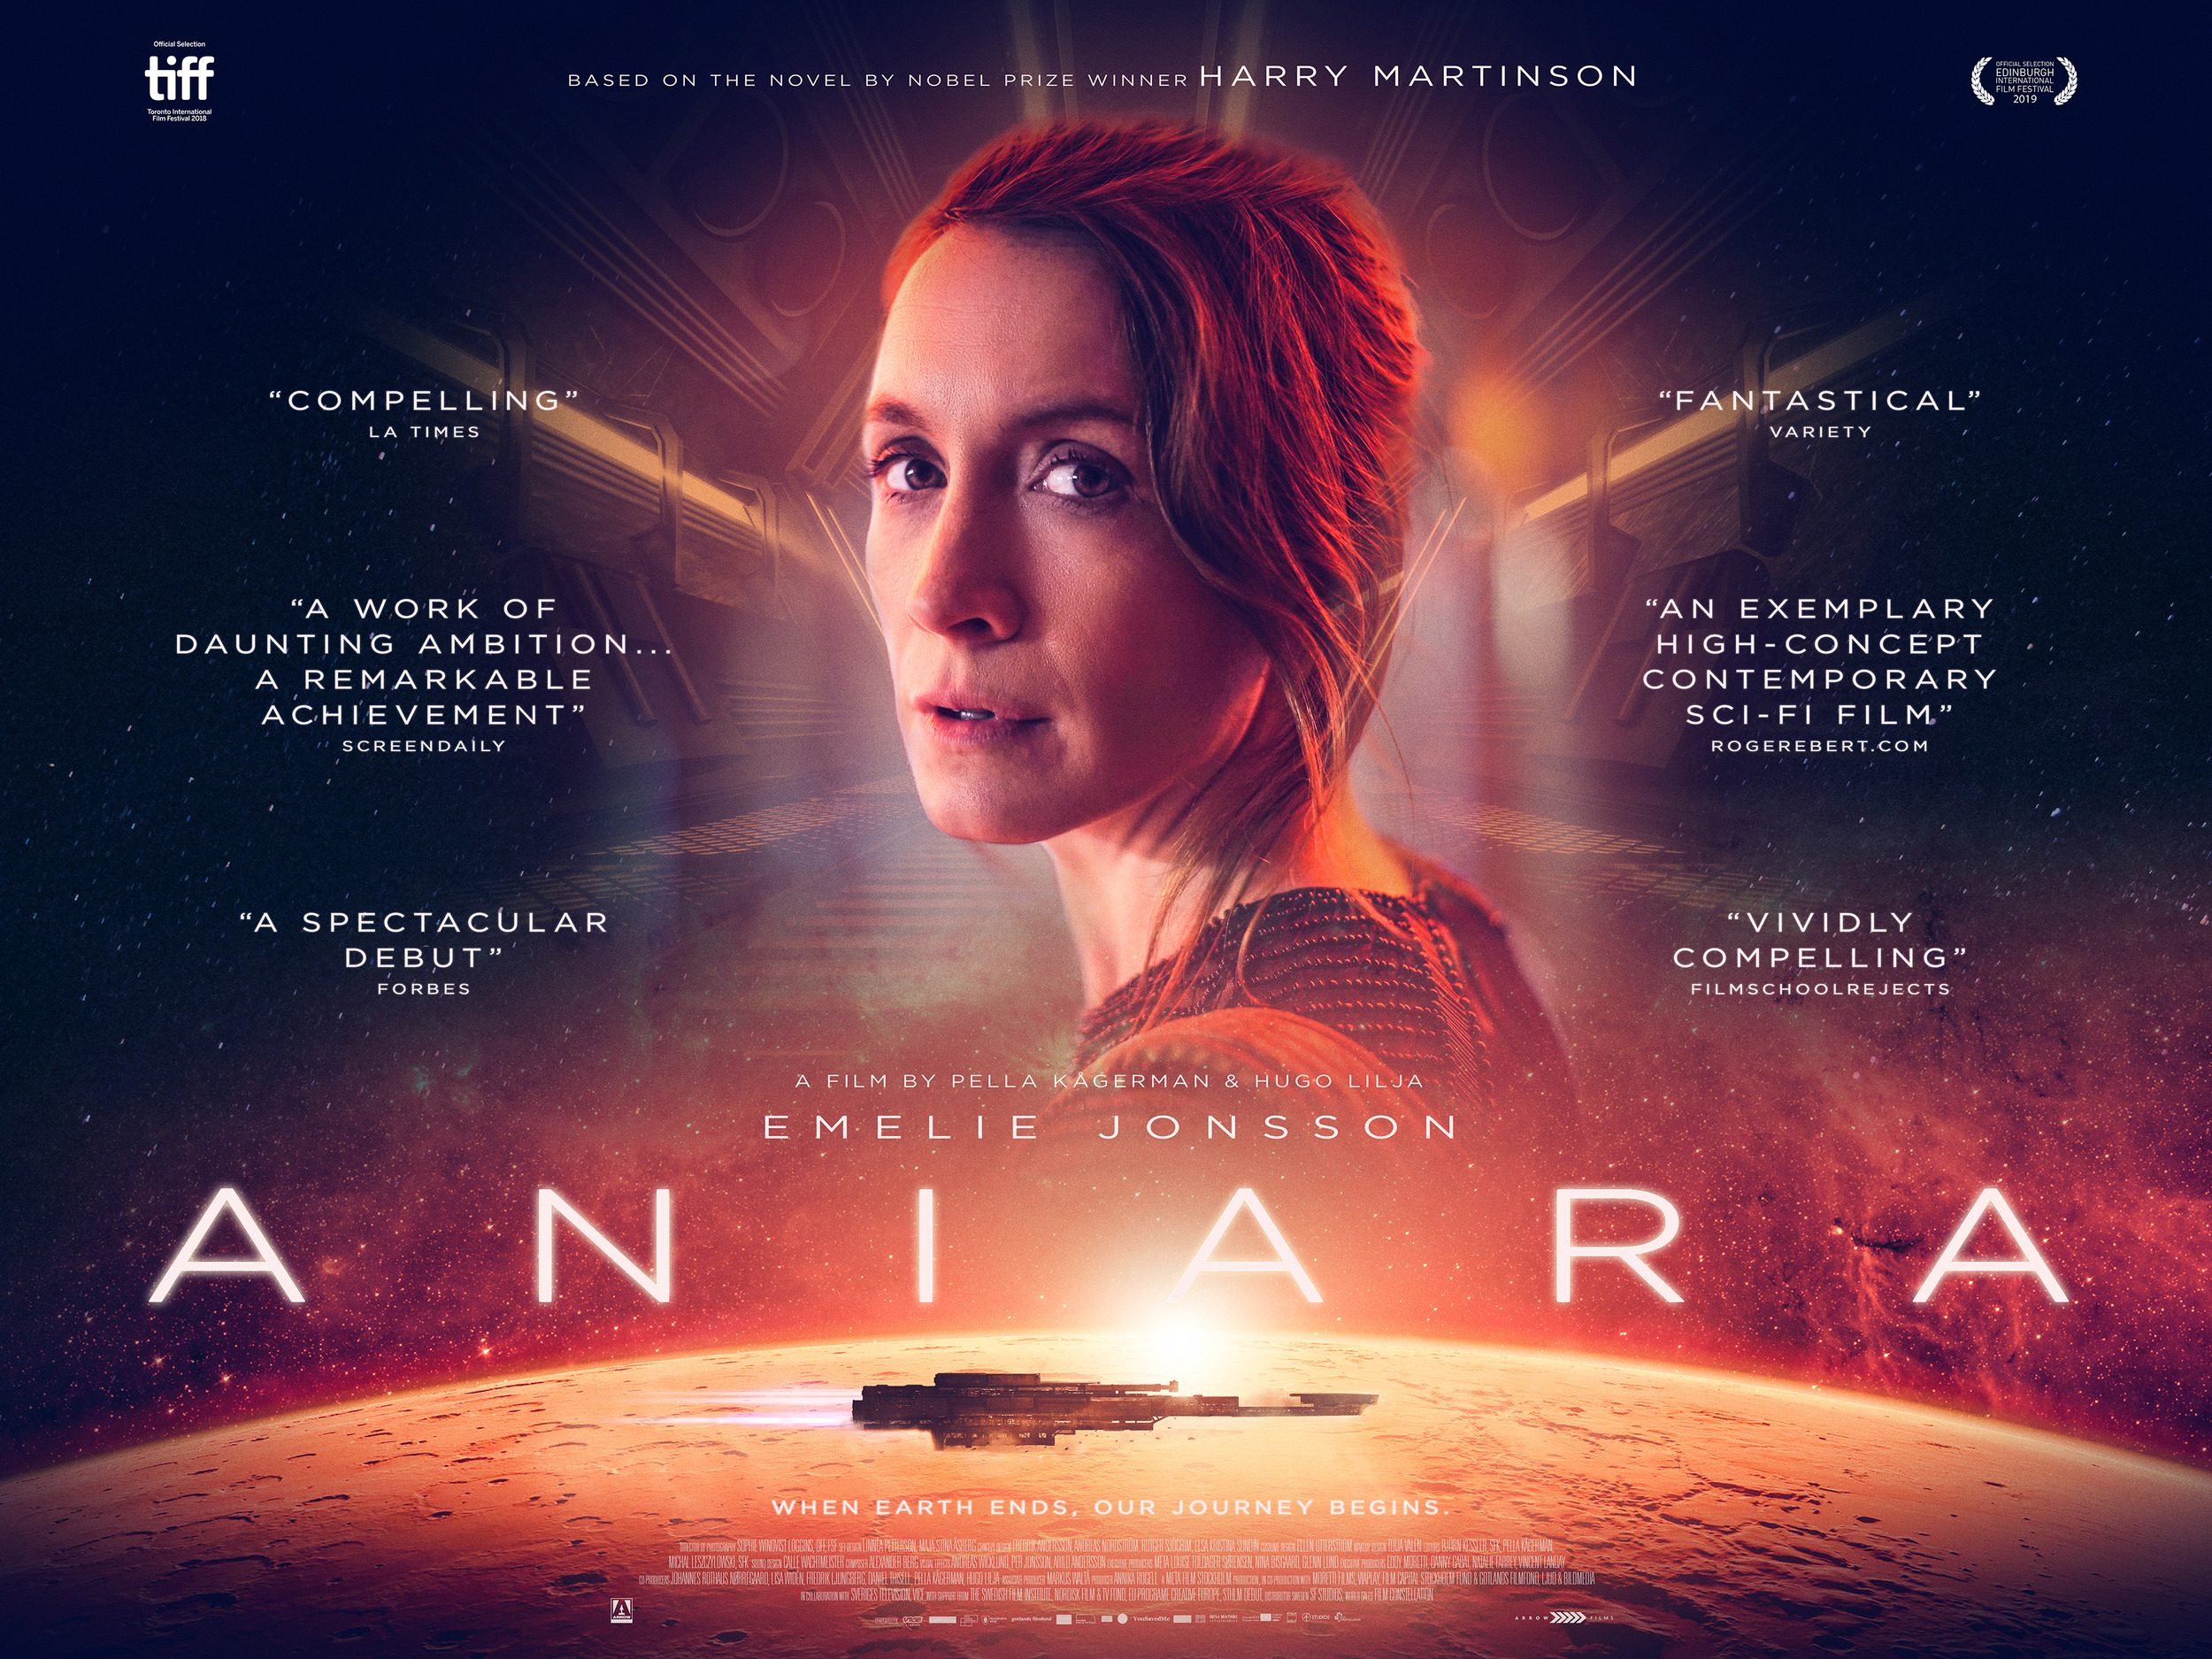 Mega Sized Movie Poster Image for Aniara (#10 of 10)